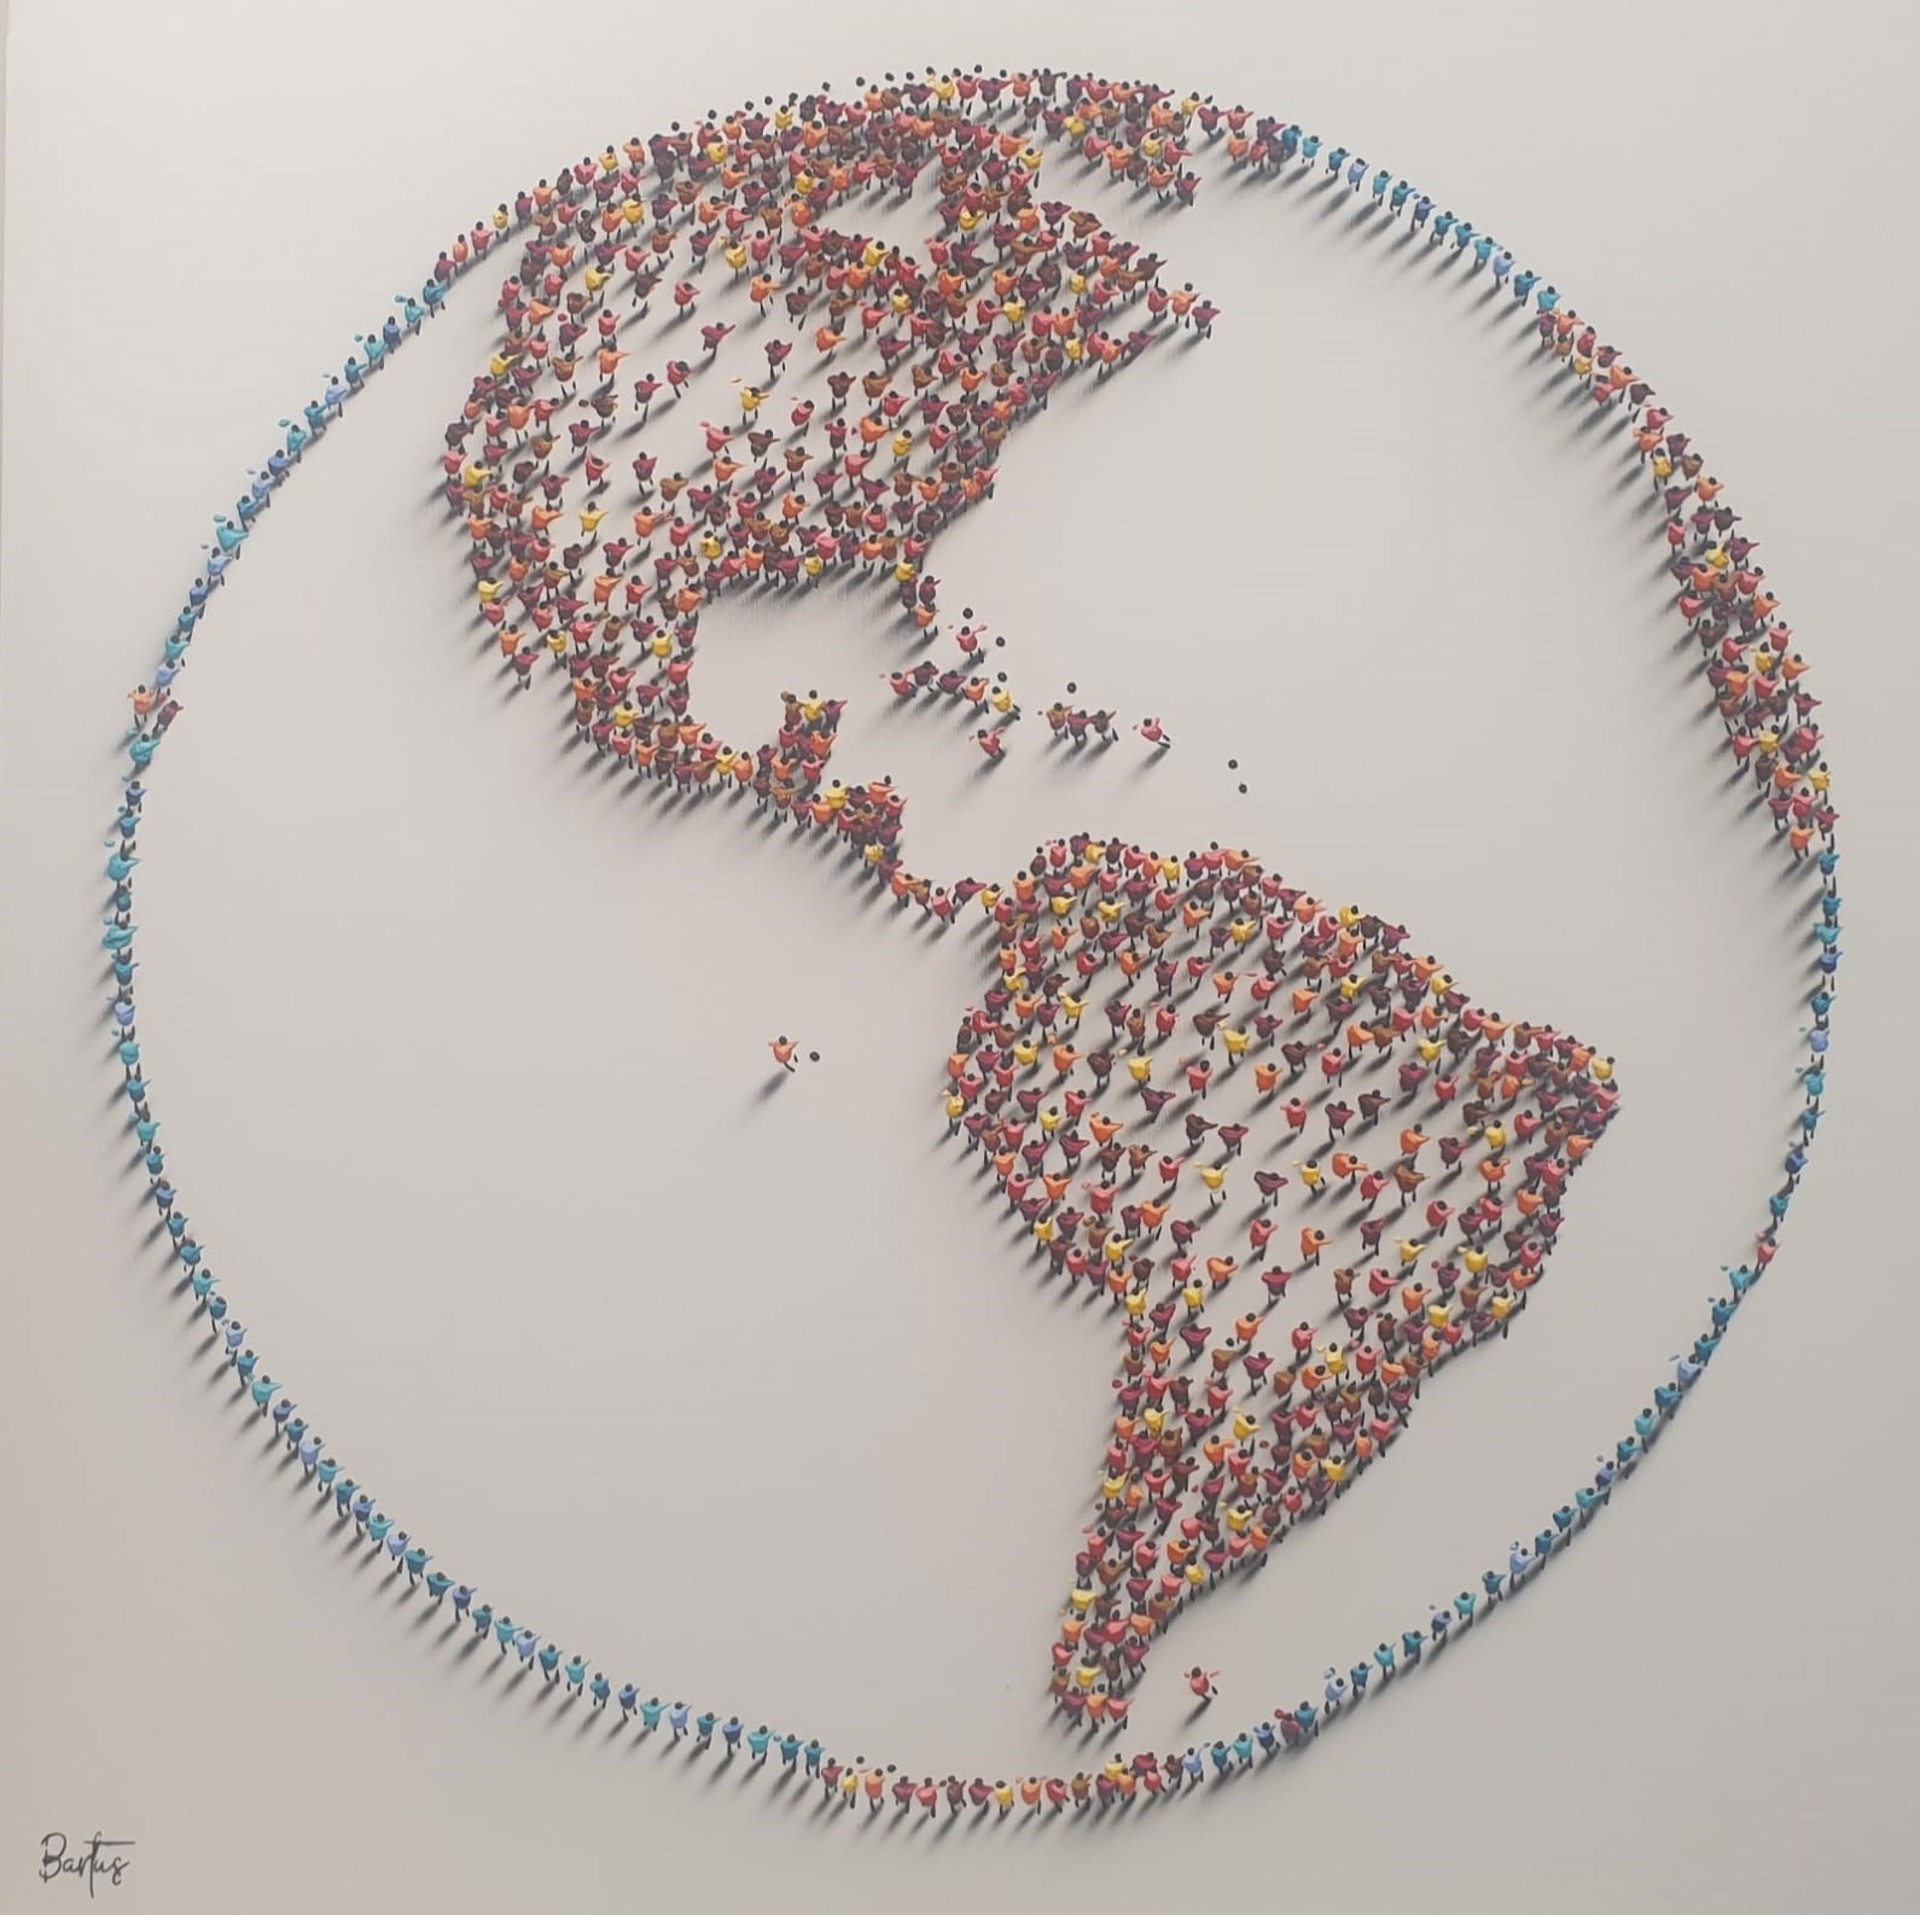 World by Francisco Bartus